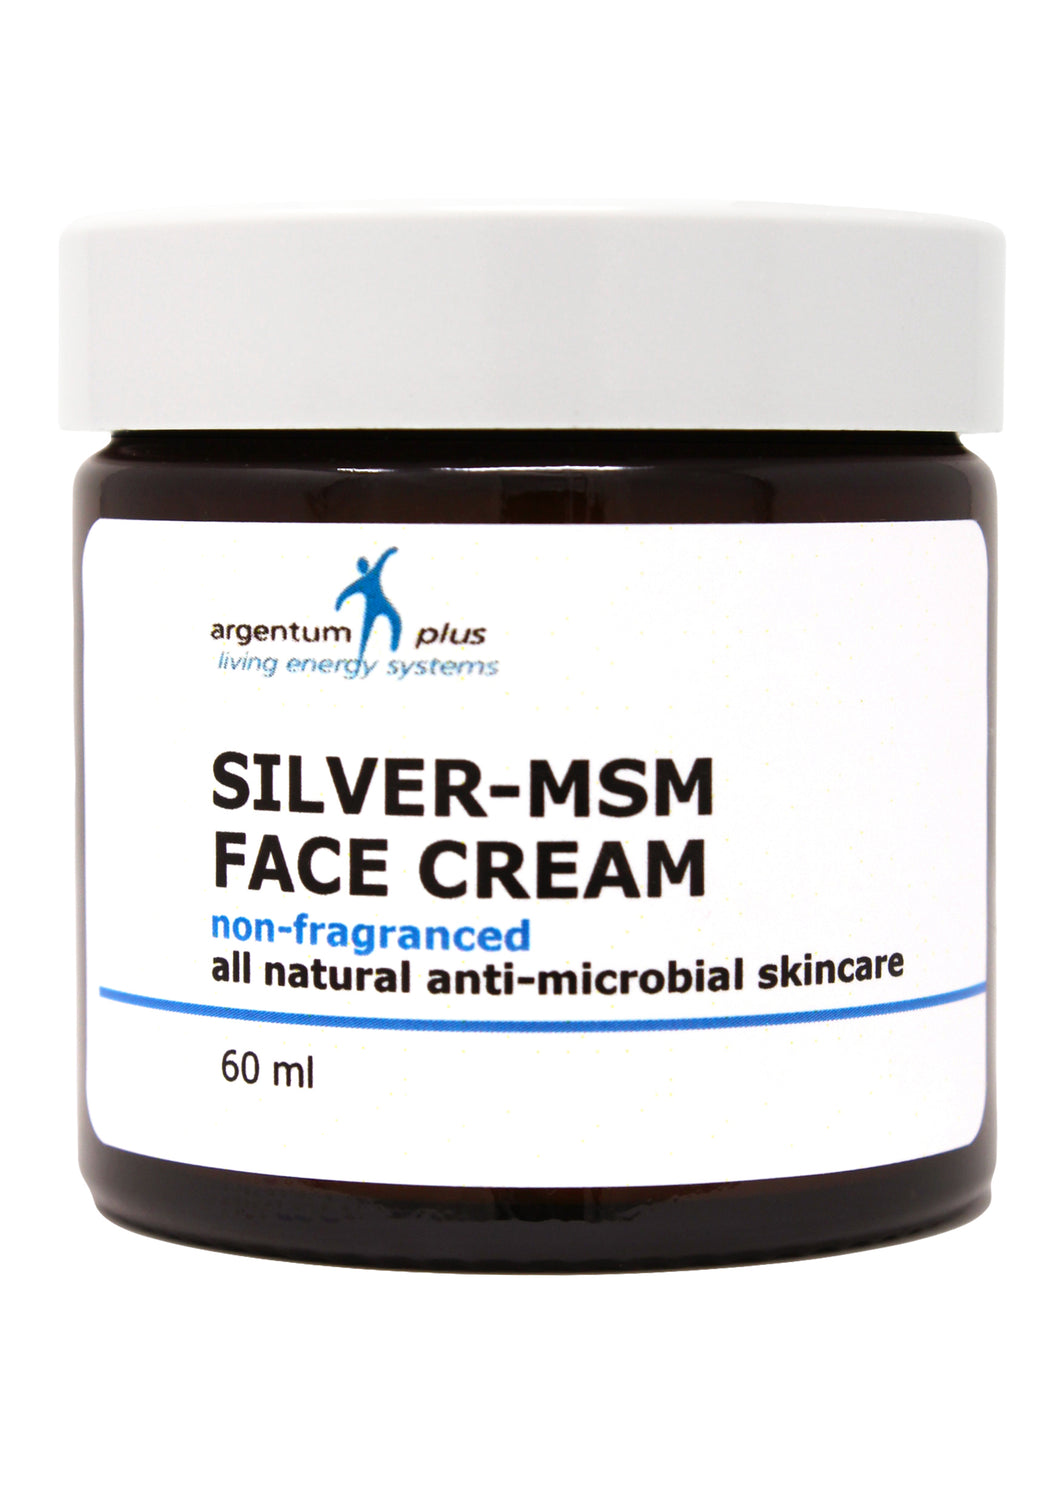 Silver-MSM Face Cream Non-Fragranced (2 size options)